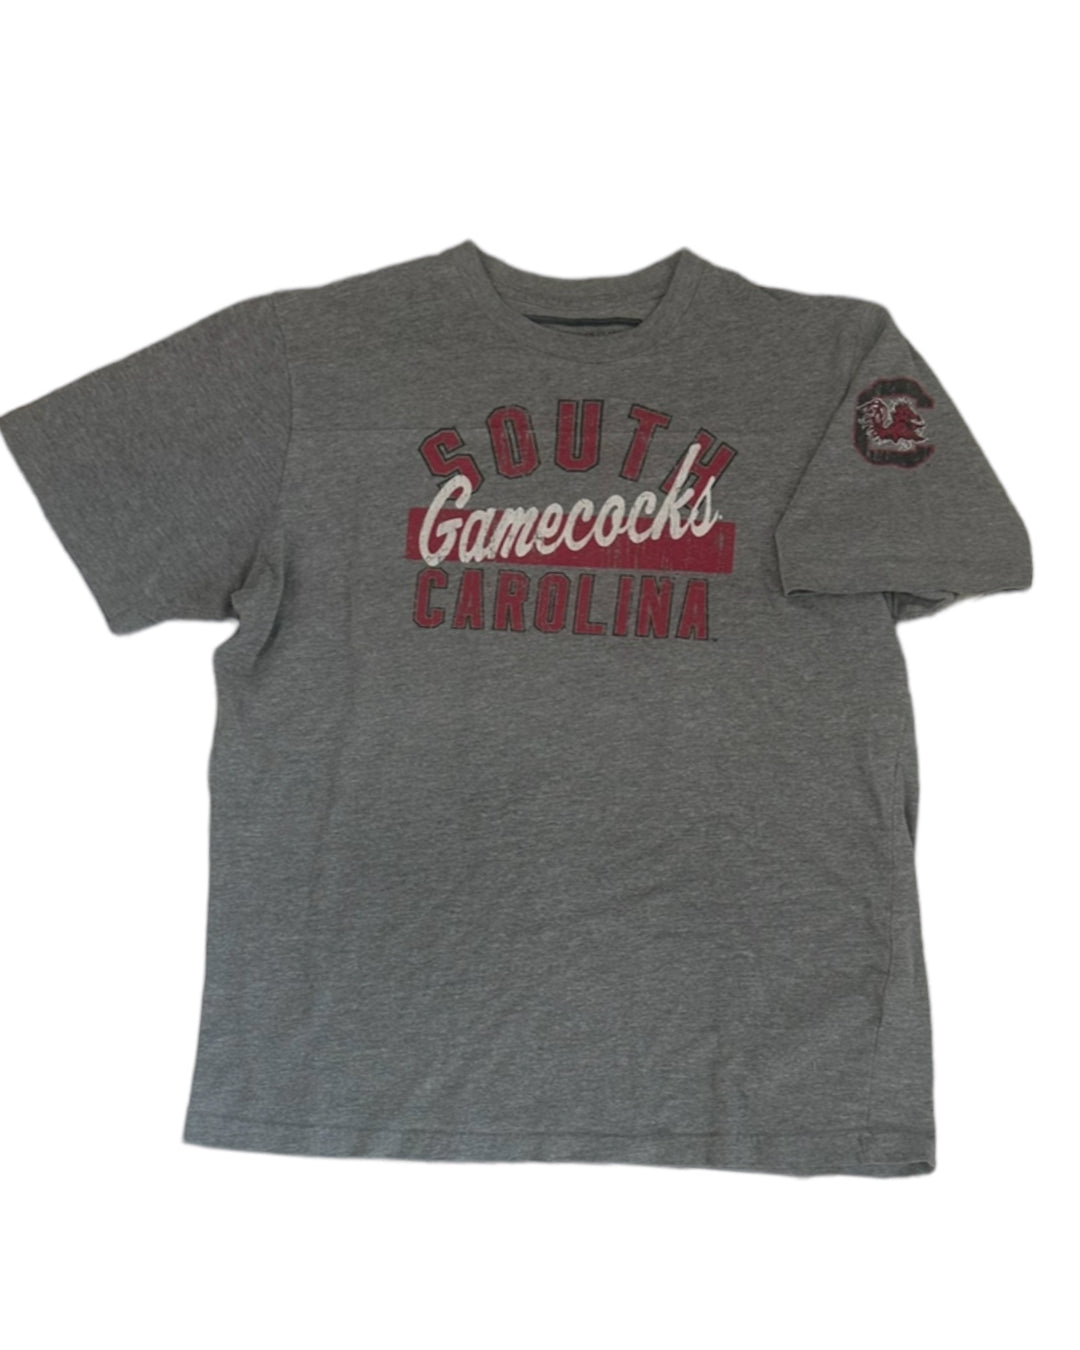 South Carolina Vintage T-Shirt